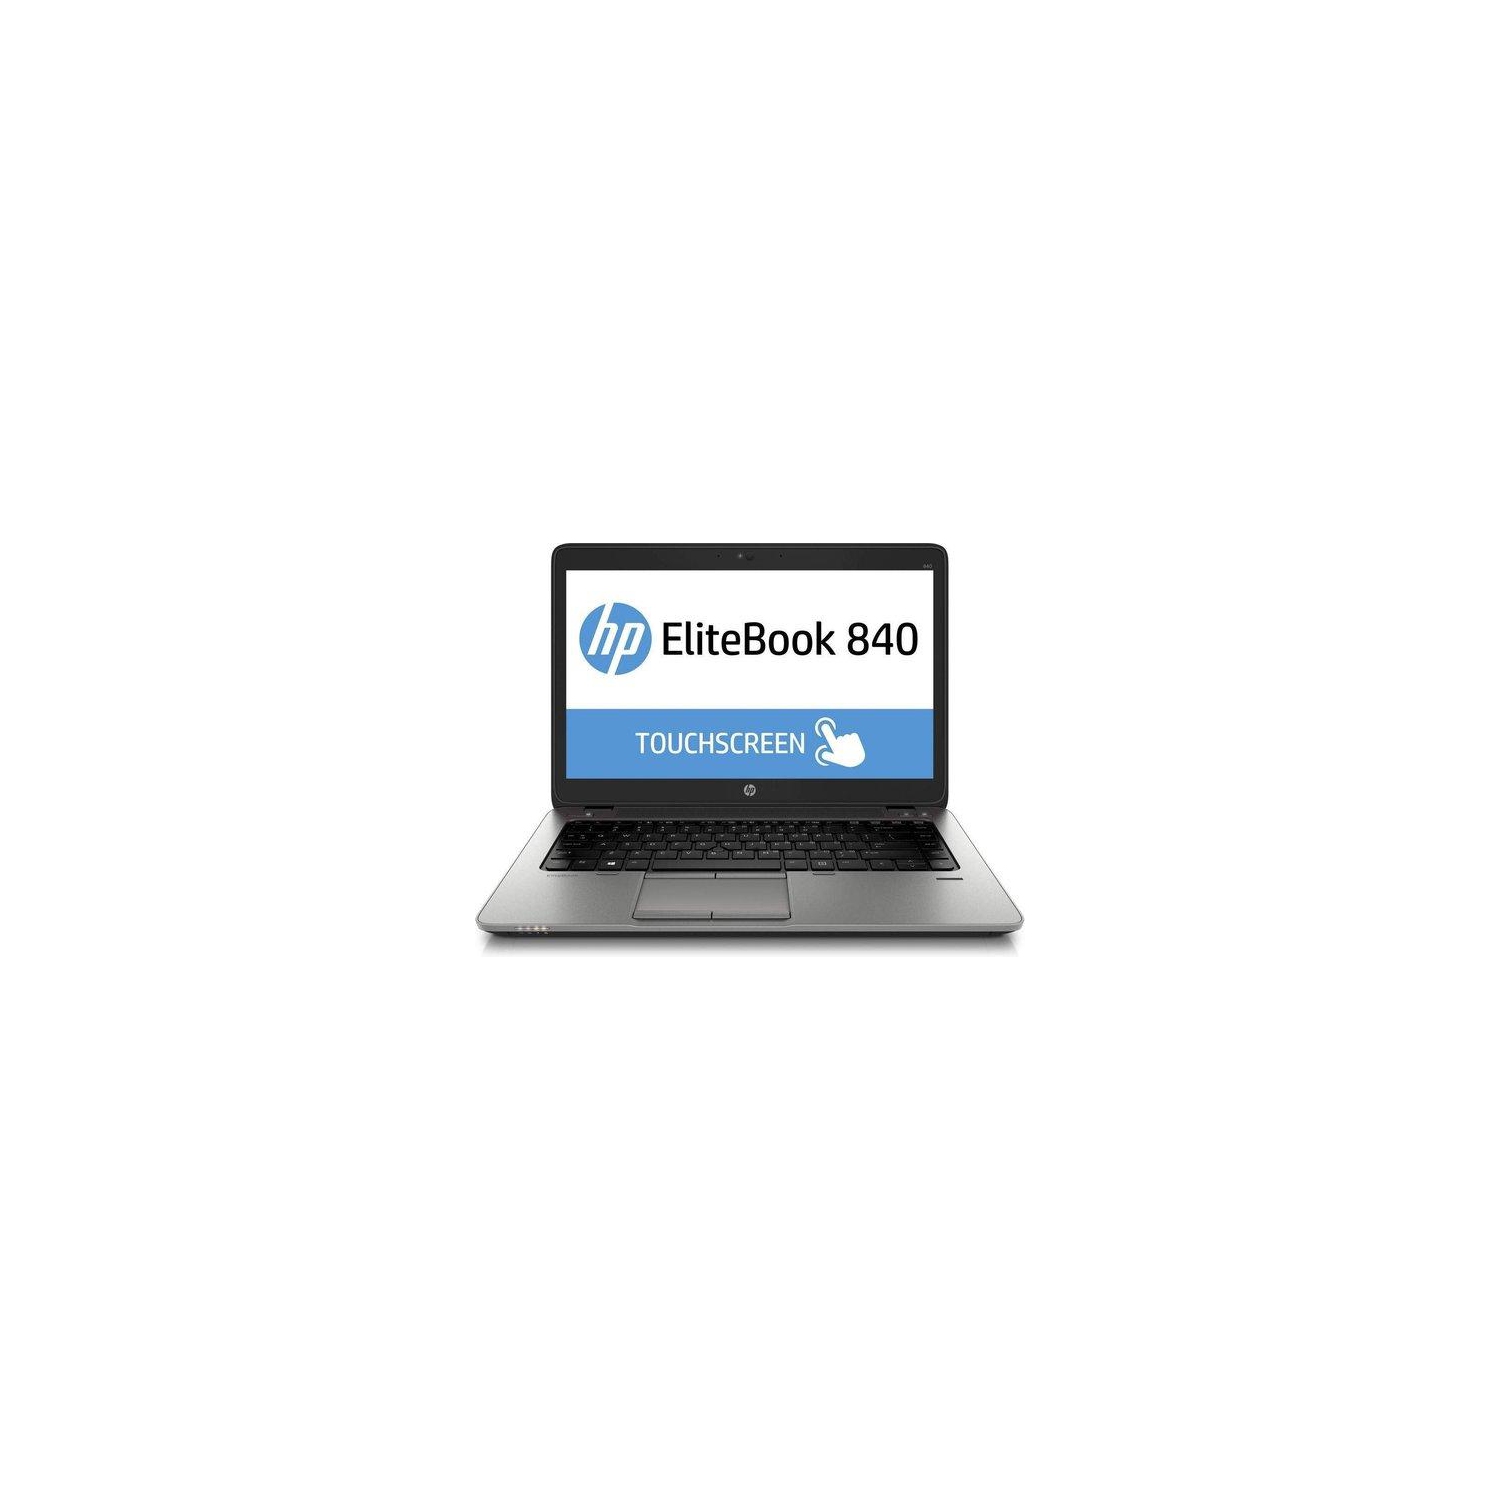 Refurbished (Good) - HP EliteBook 840 G3 14" FHD Business Laptop: i5-6200u 2.3GHz; 16G RAM; 256G SSD; Webcam; Backlit Keyboard, Win10 pro "â€œ